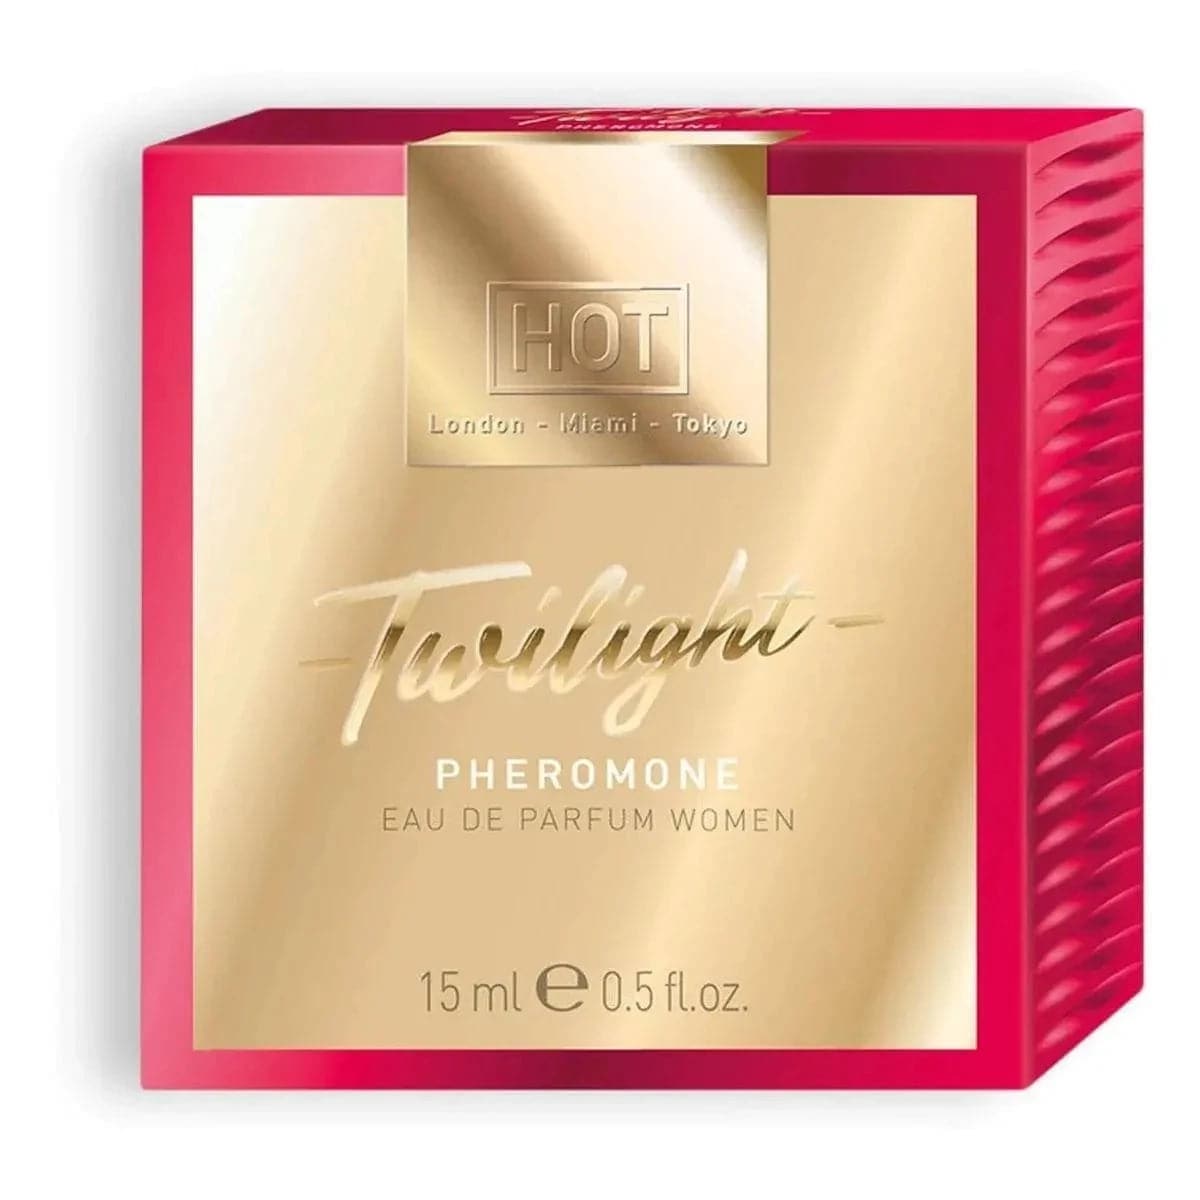 Perfume Mulher com Feromonas, Twilight 15ml  HOT   